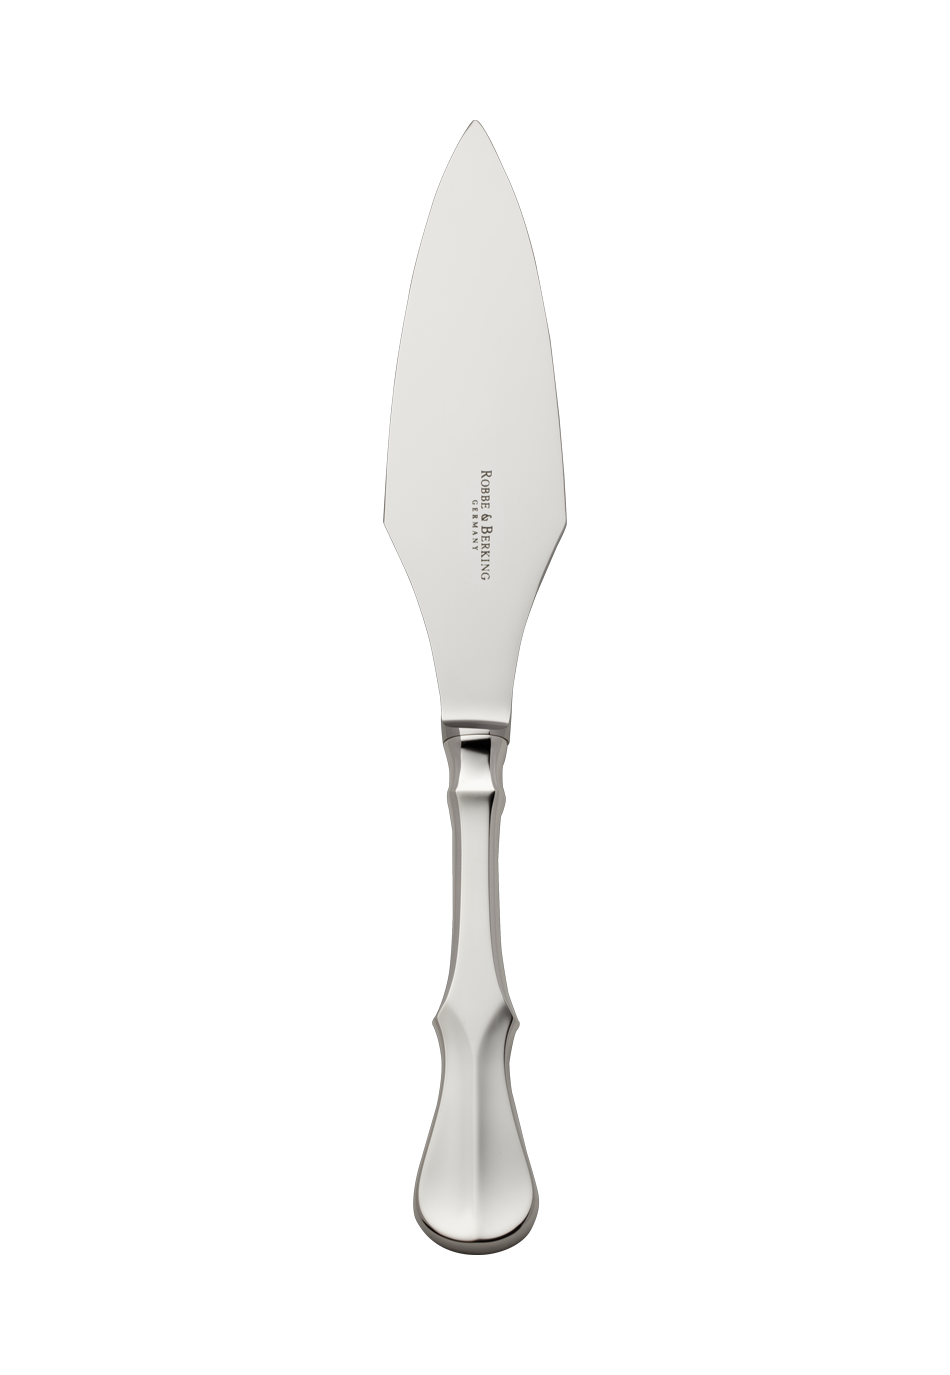 Alt-Kopenhagen Tart Knife (150g massive silverplated)